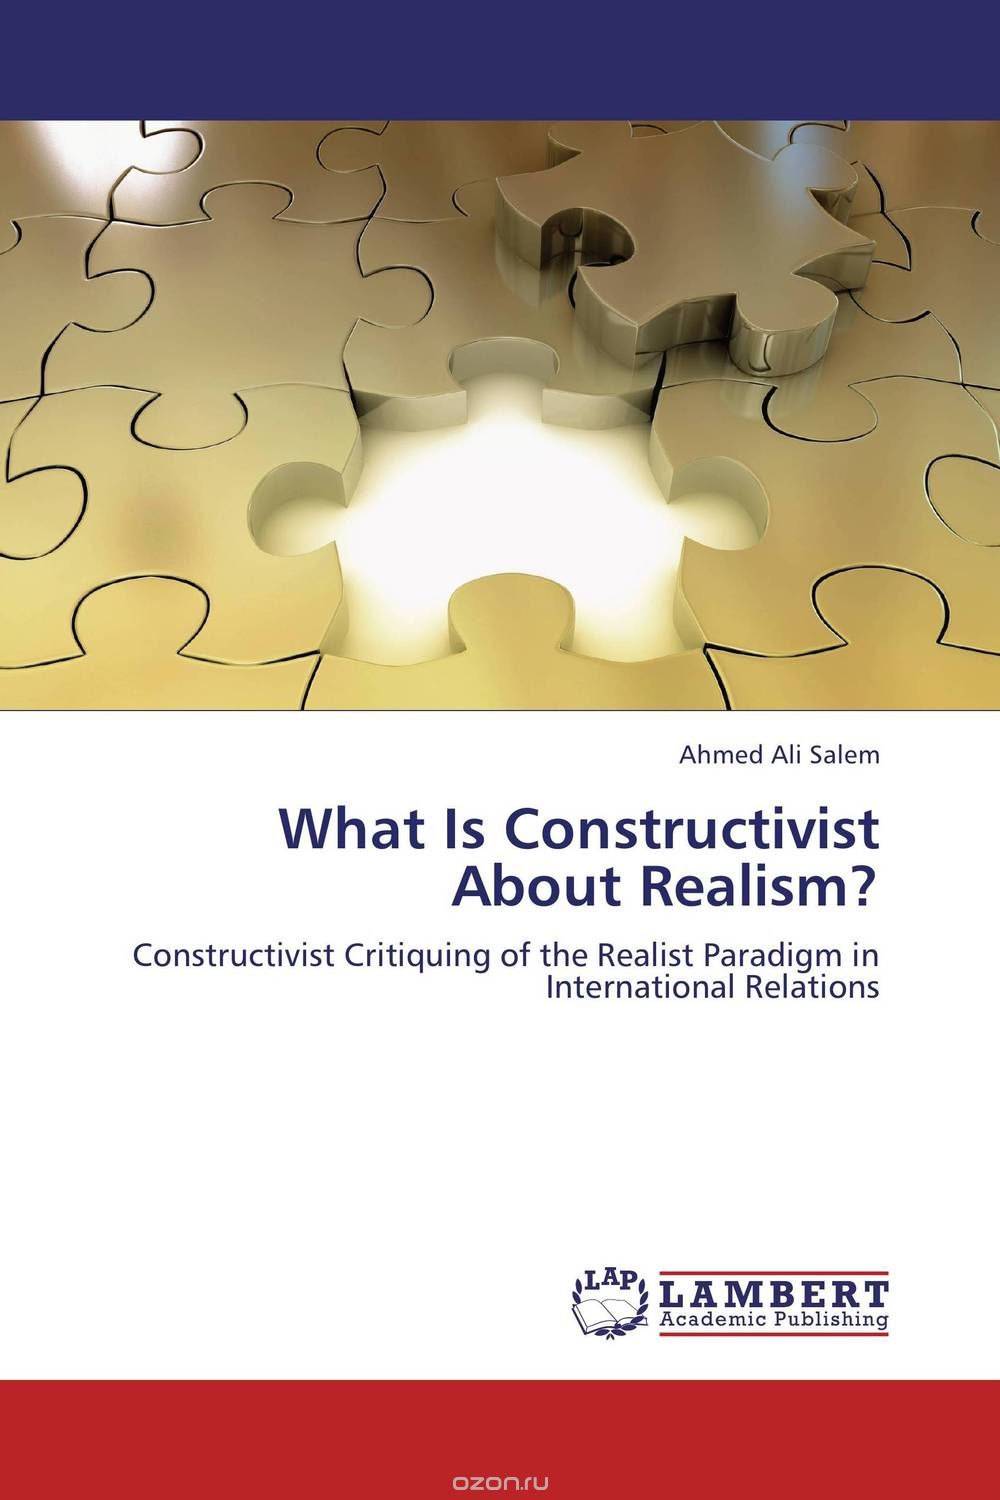 Скачать книгу "What Is Constructivist About Realism?"